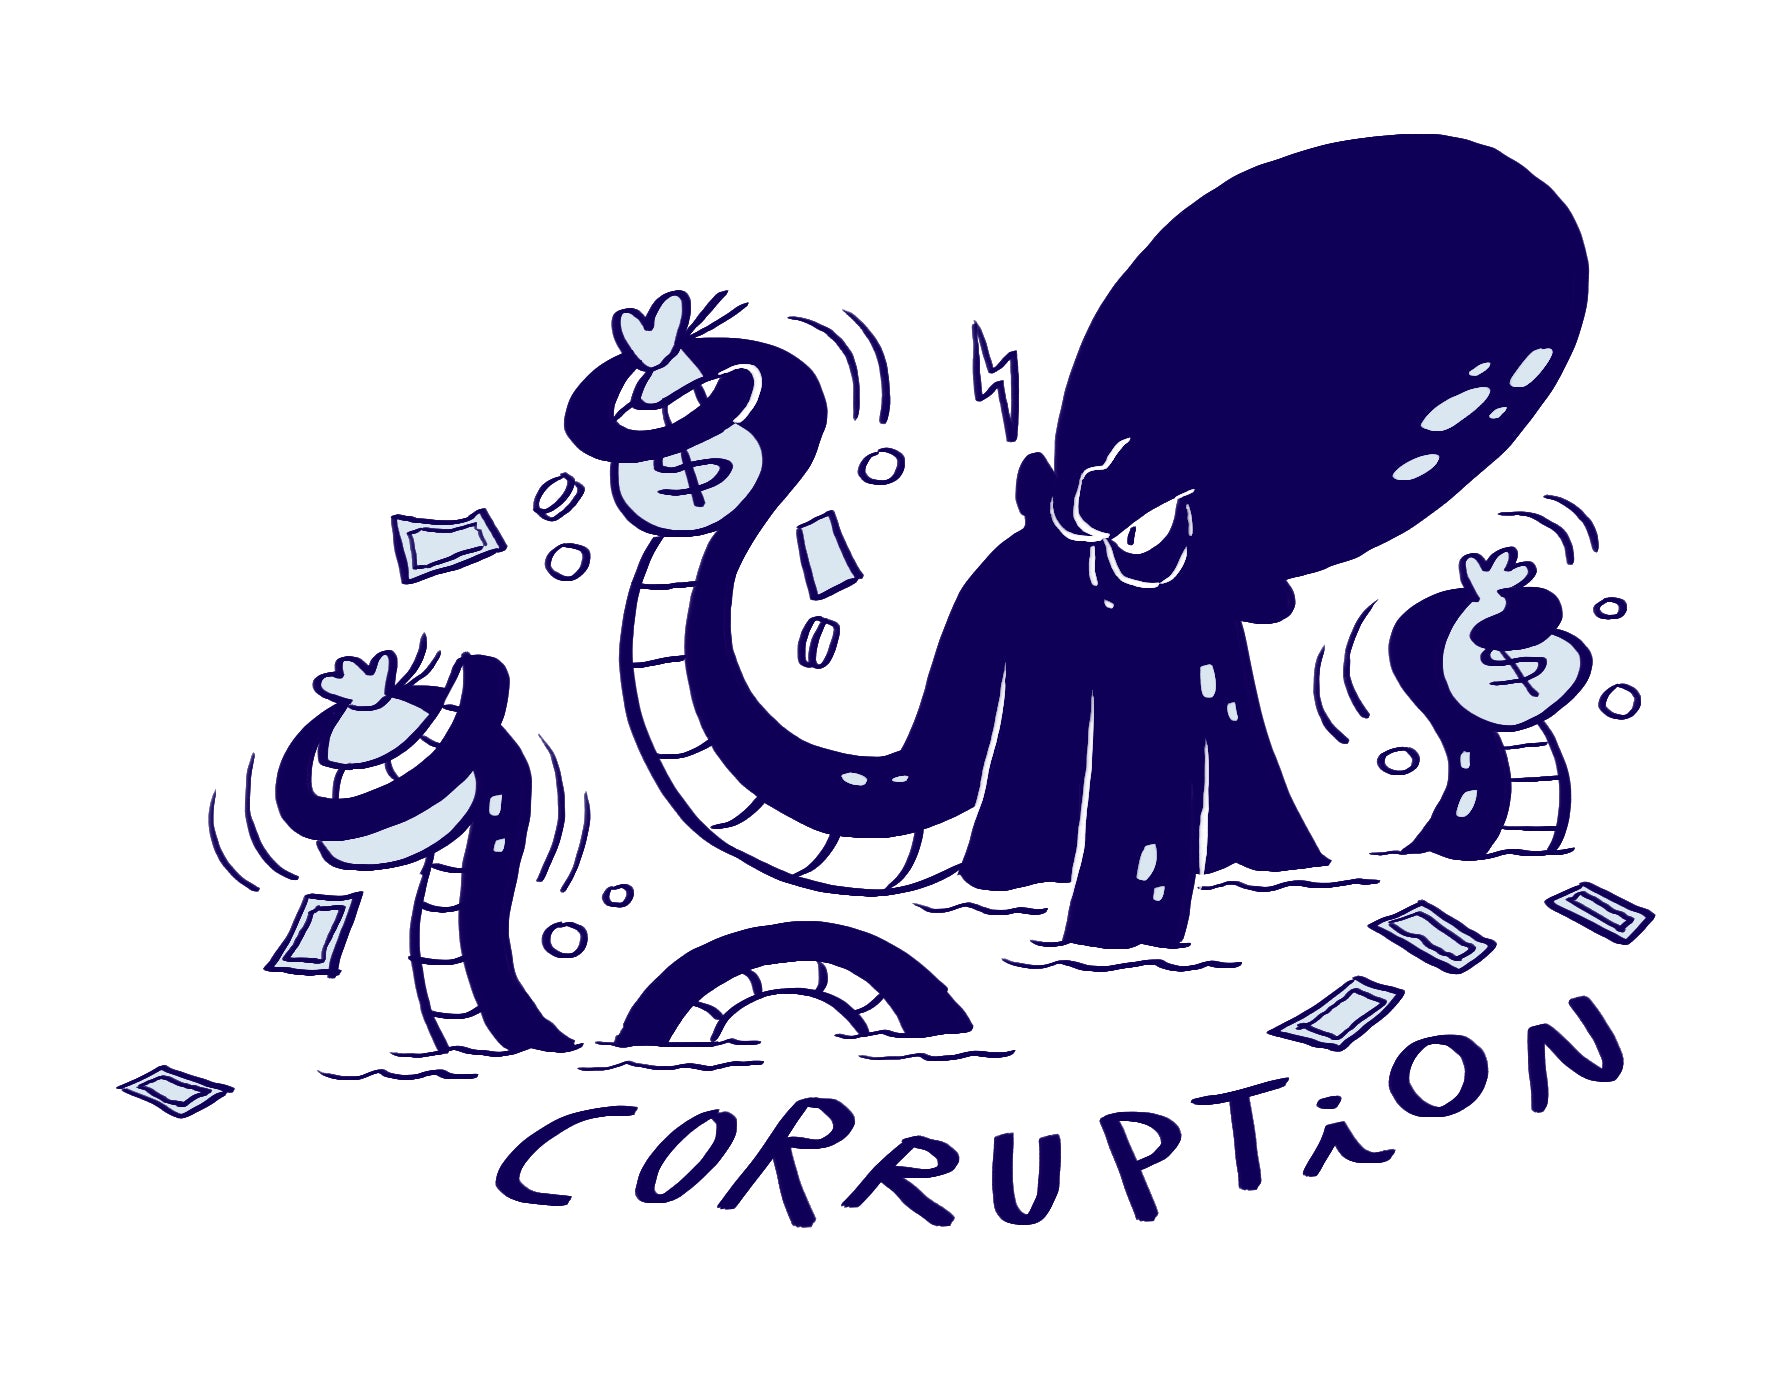 correspondents' anti-corruption training